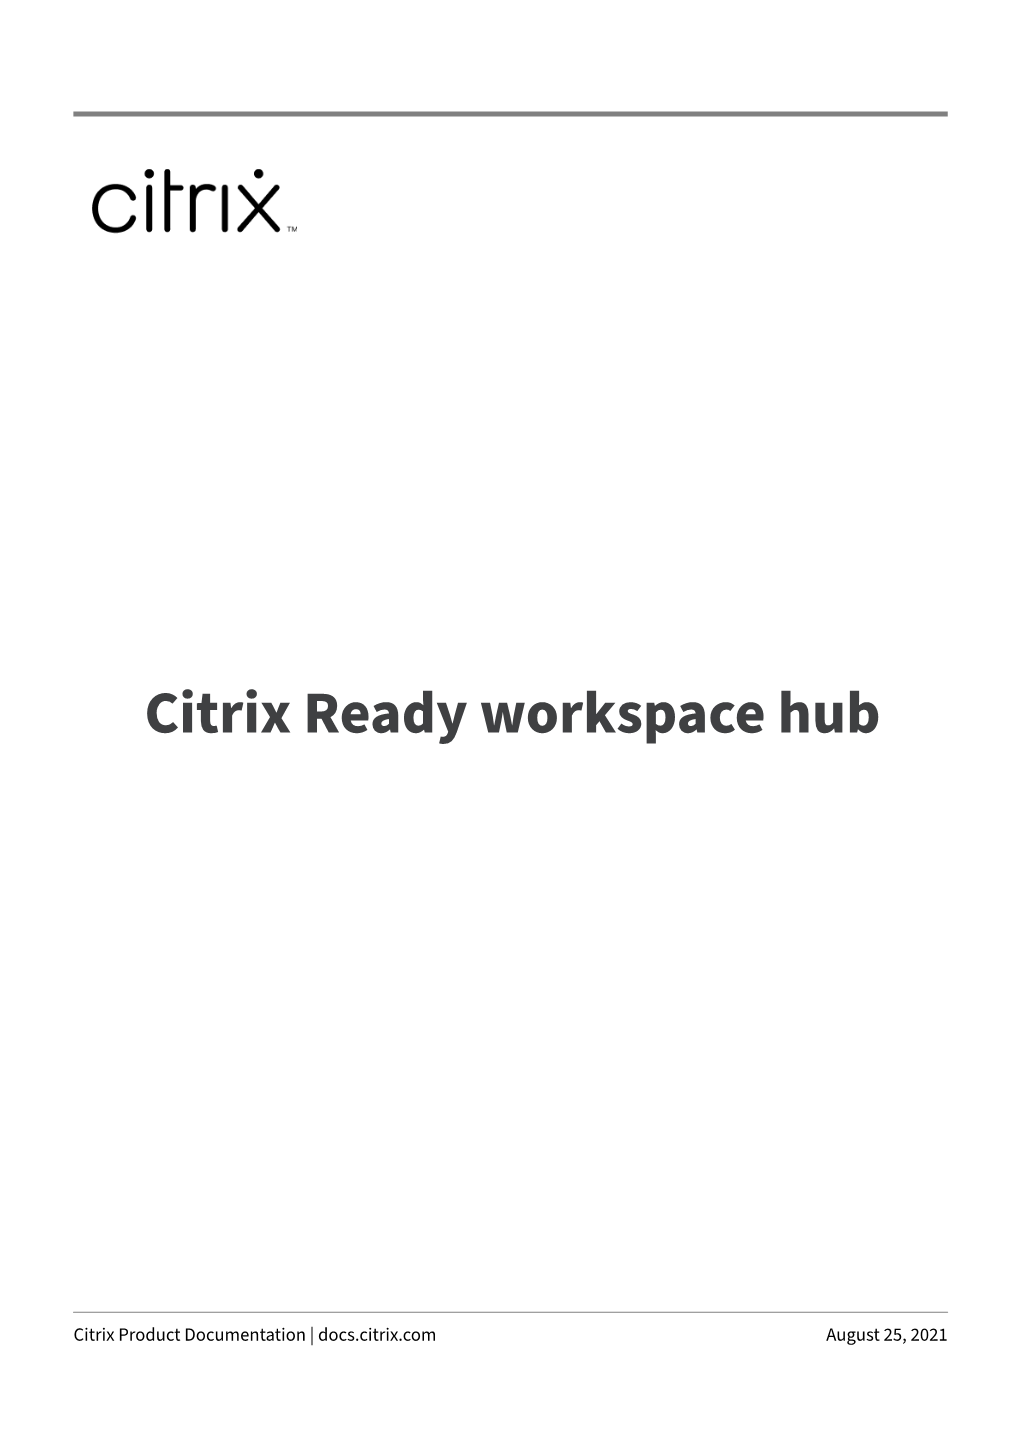 Citrix Ready Workspace Hub